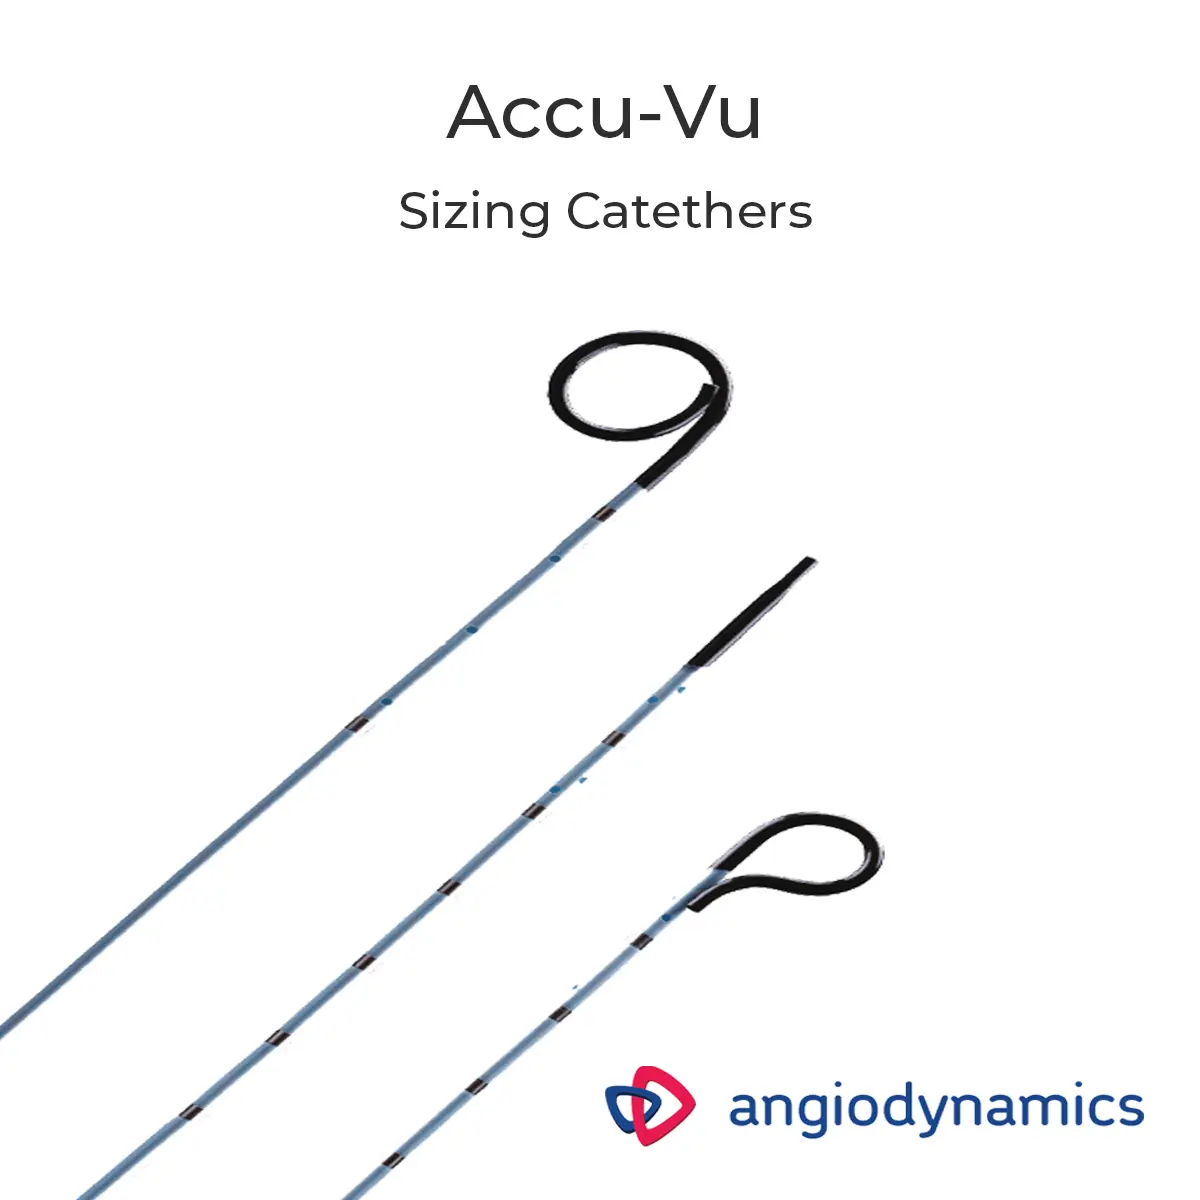 AngioDynamics 137098025 Accu-Vu Sizing Catheter 5F 20 cm Segment Pigtail 70 cm. Box of 5 accu-vu, angiographic catheter, angiodynamics 137098025, segment pigtail